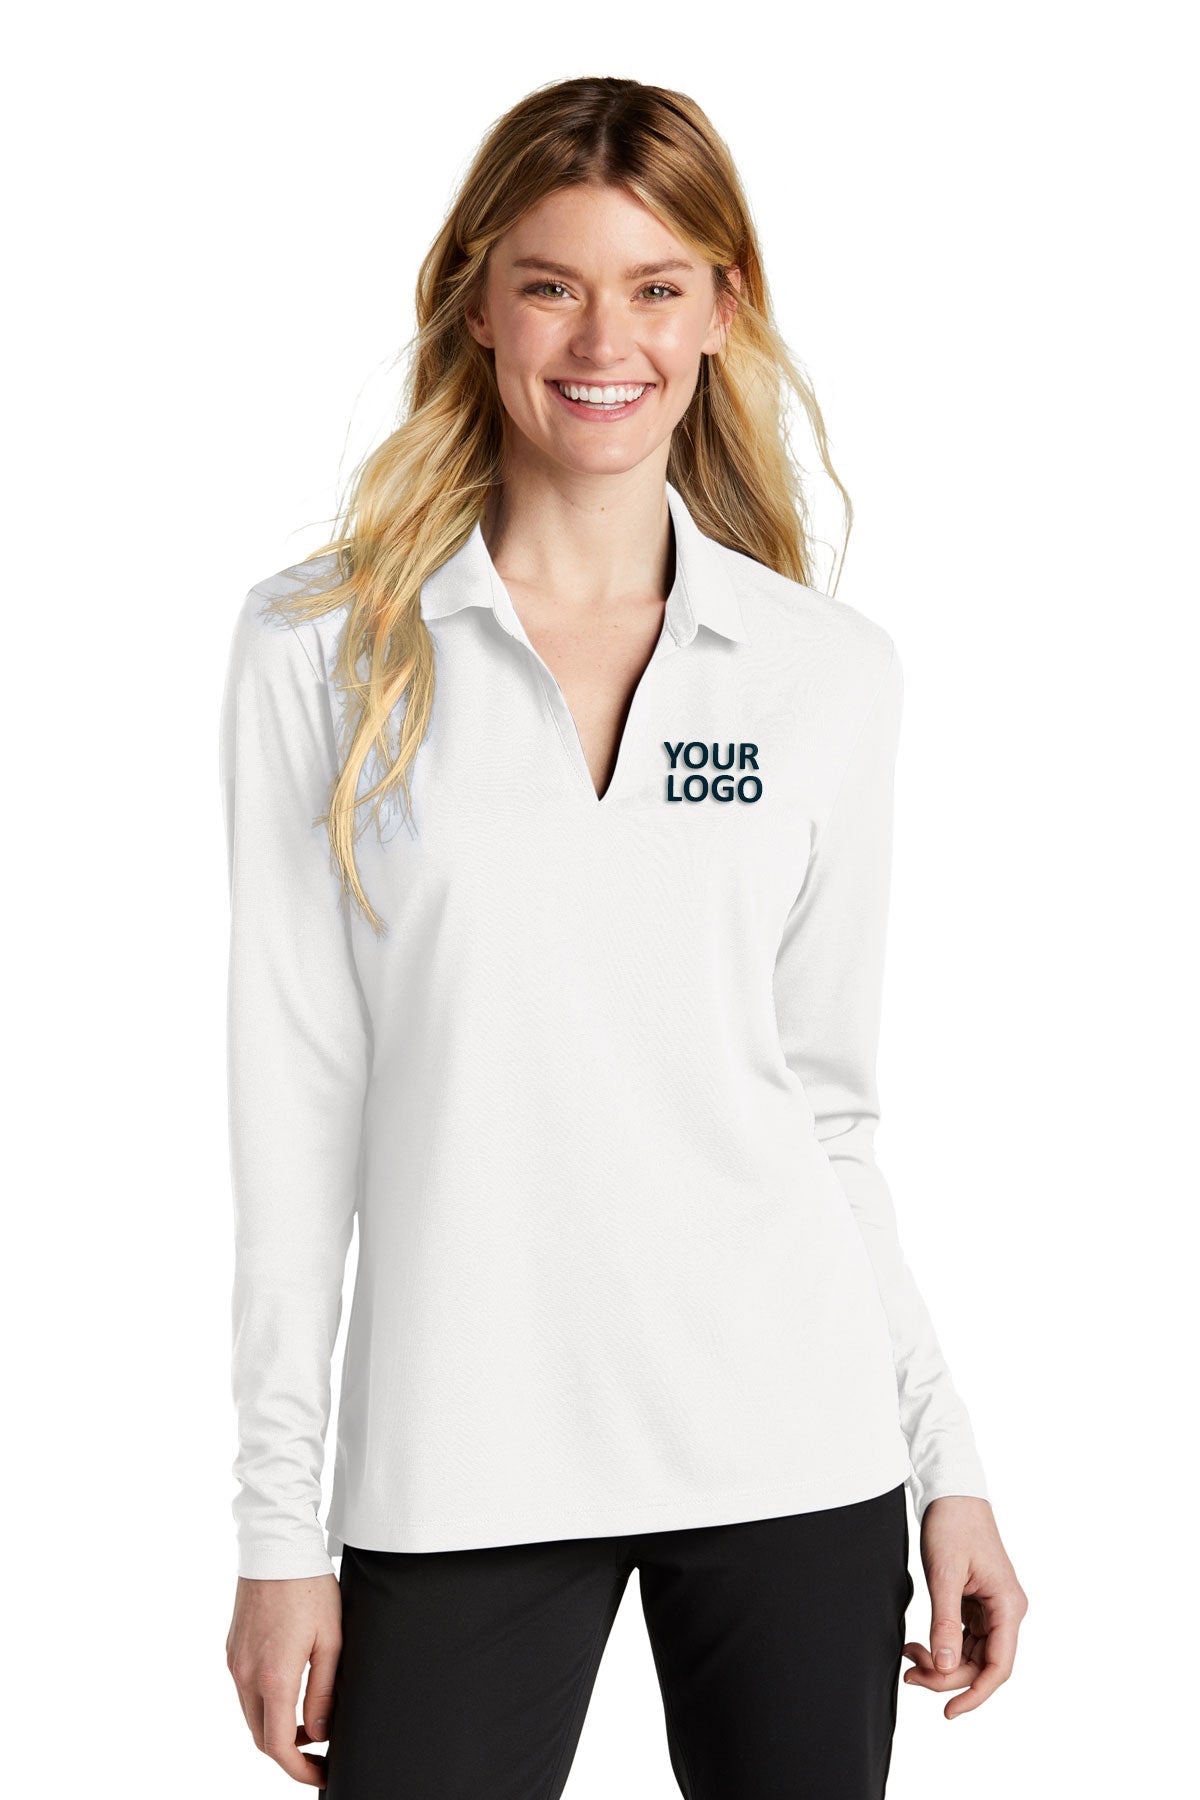 Nike White NKDC2105 polo shirts with logos